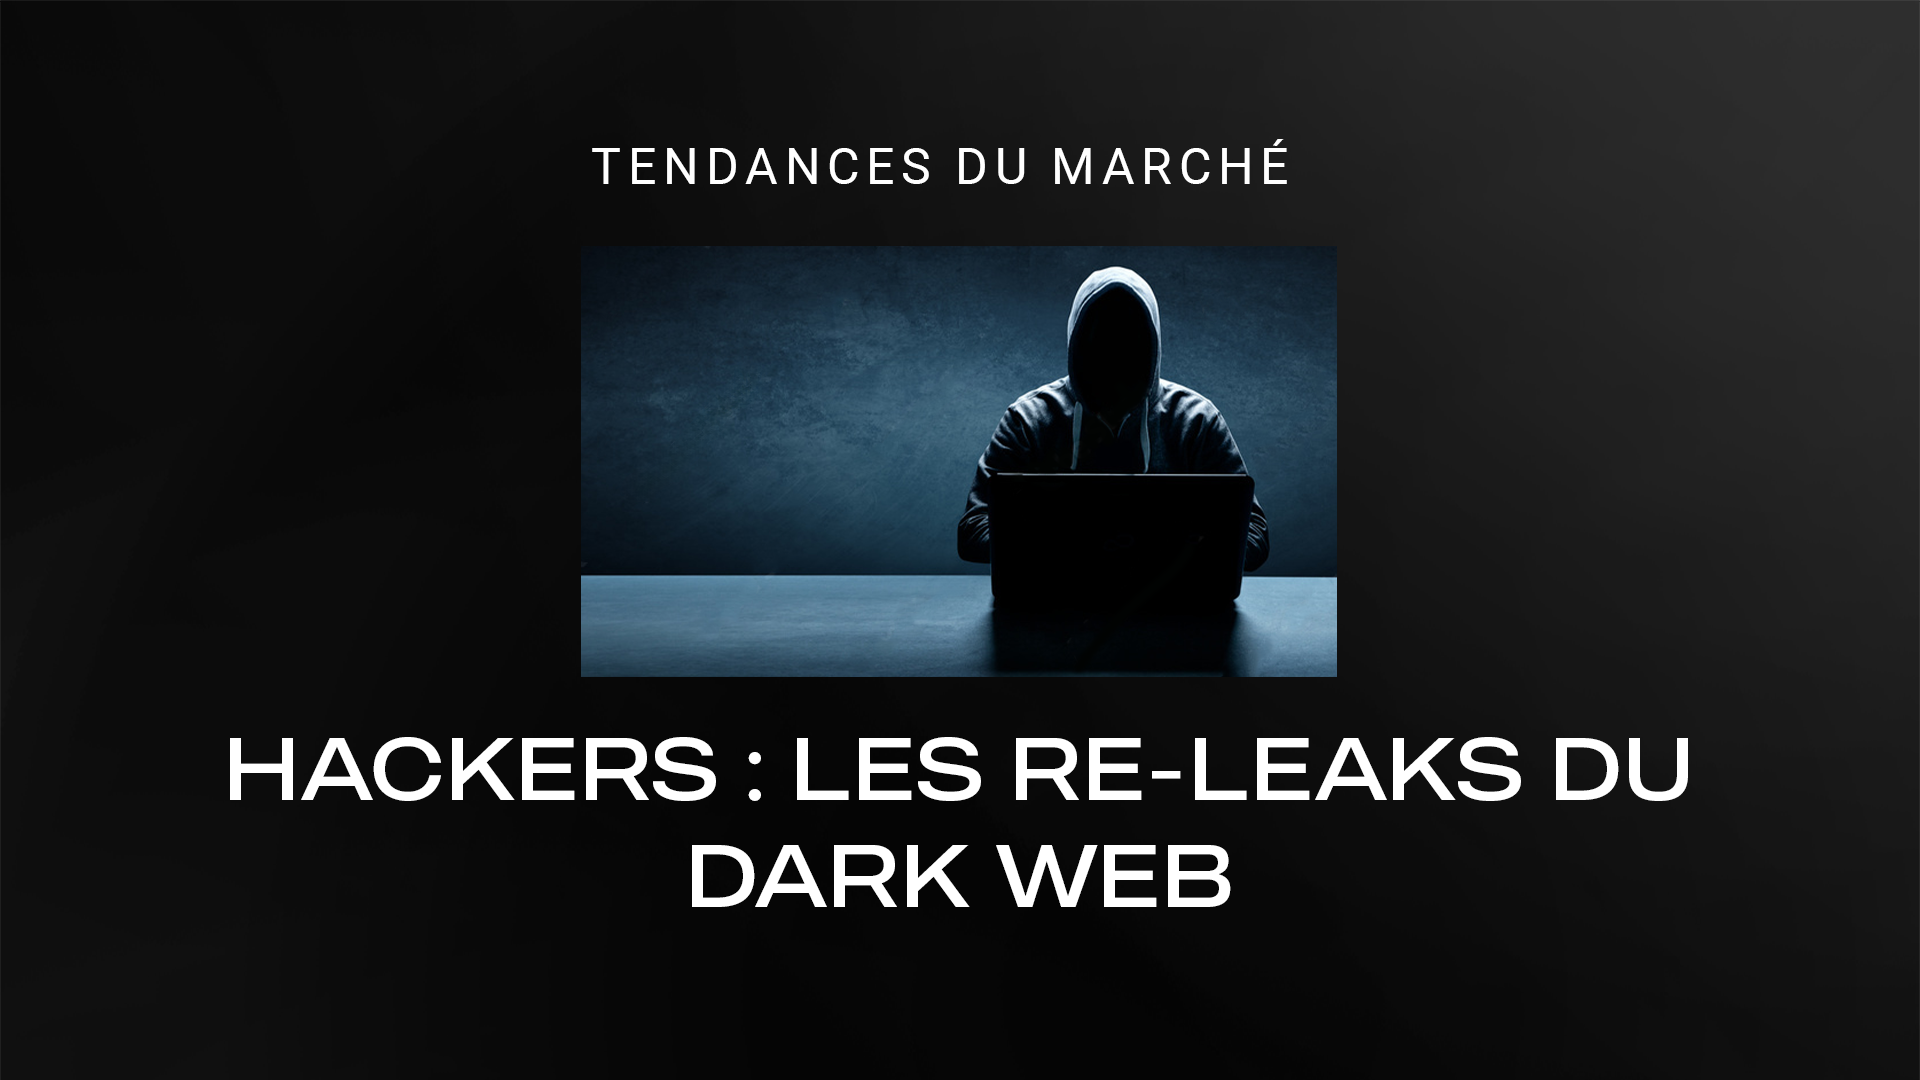 Darkweb, hackers, leaks